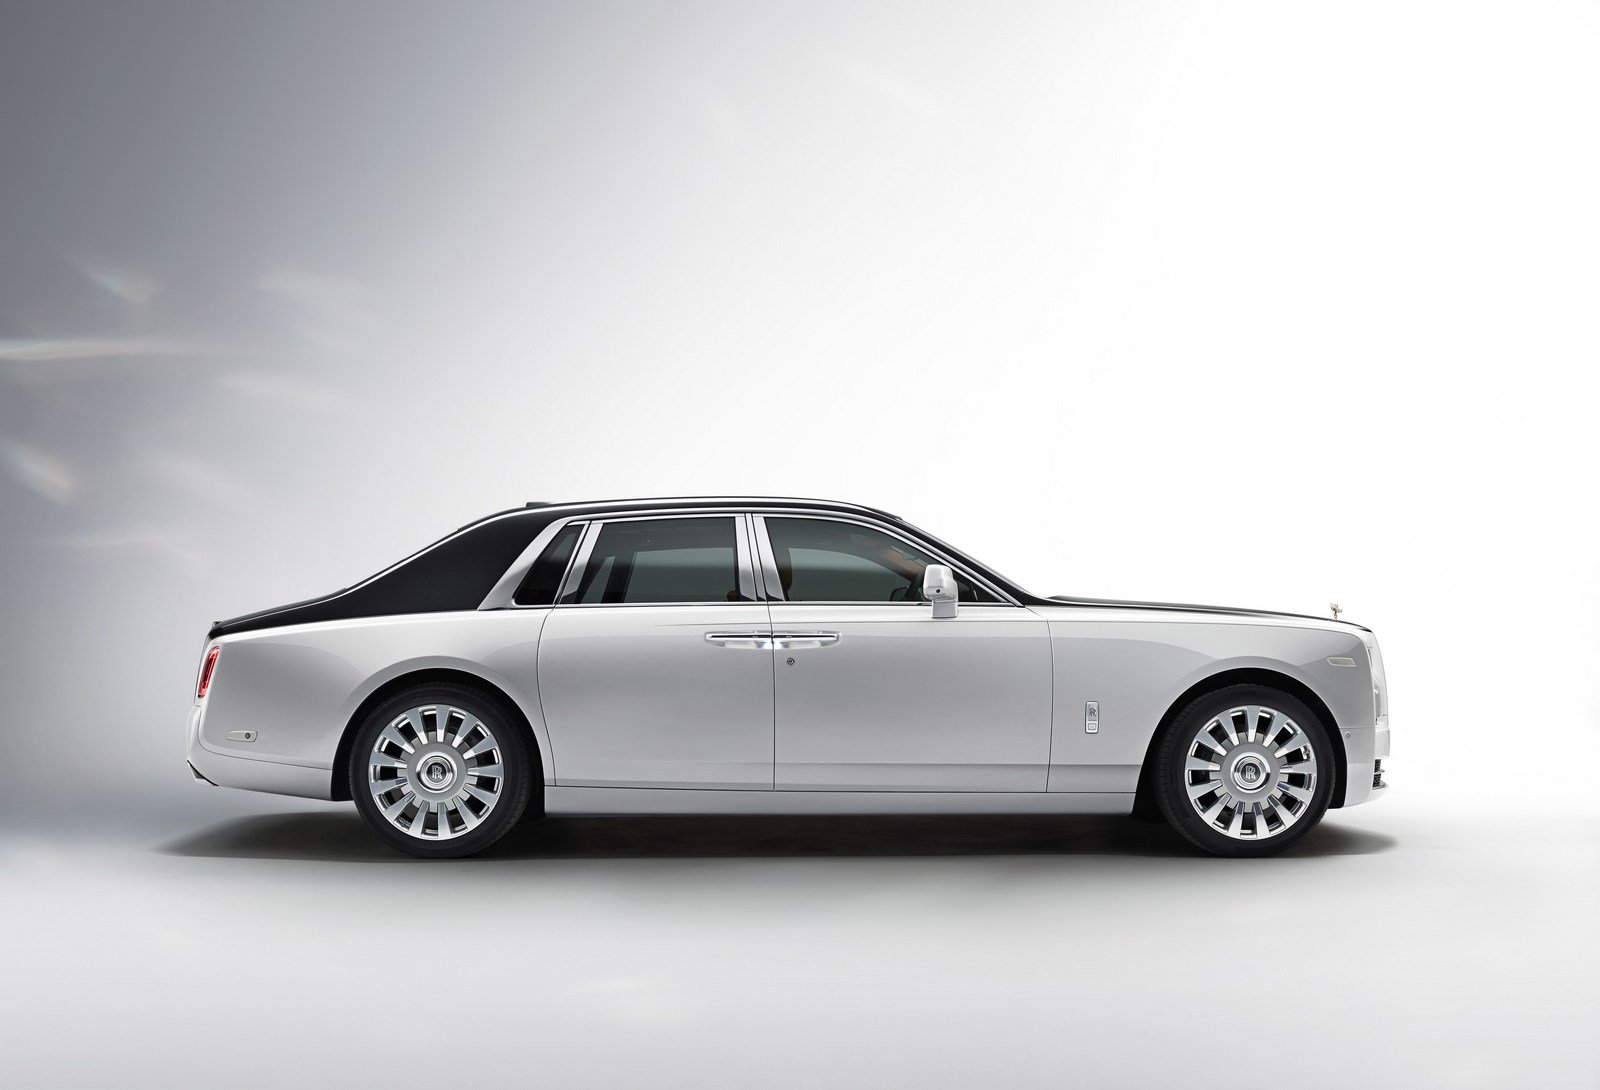 Zcela nový Rolls-Royce Phantom